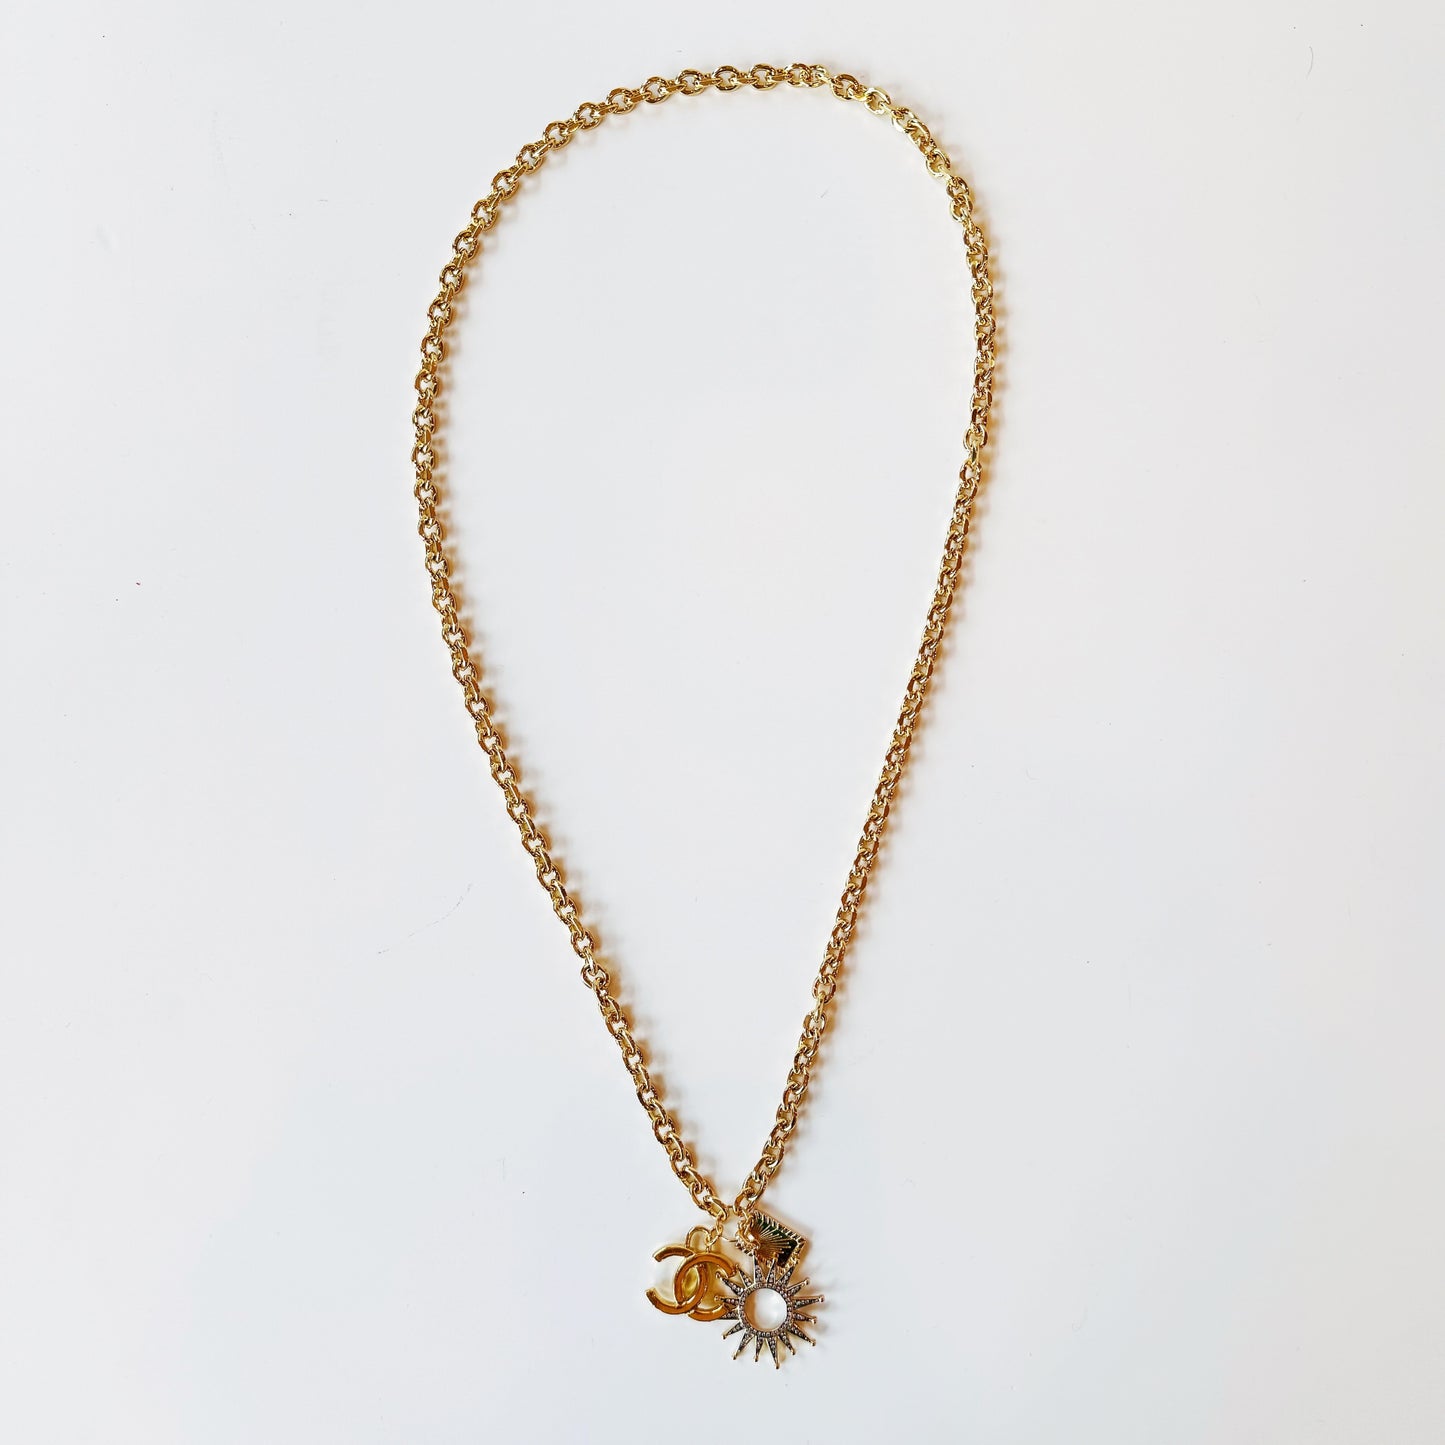 "The Golden Goddess" Designer Necklace